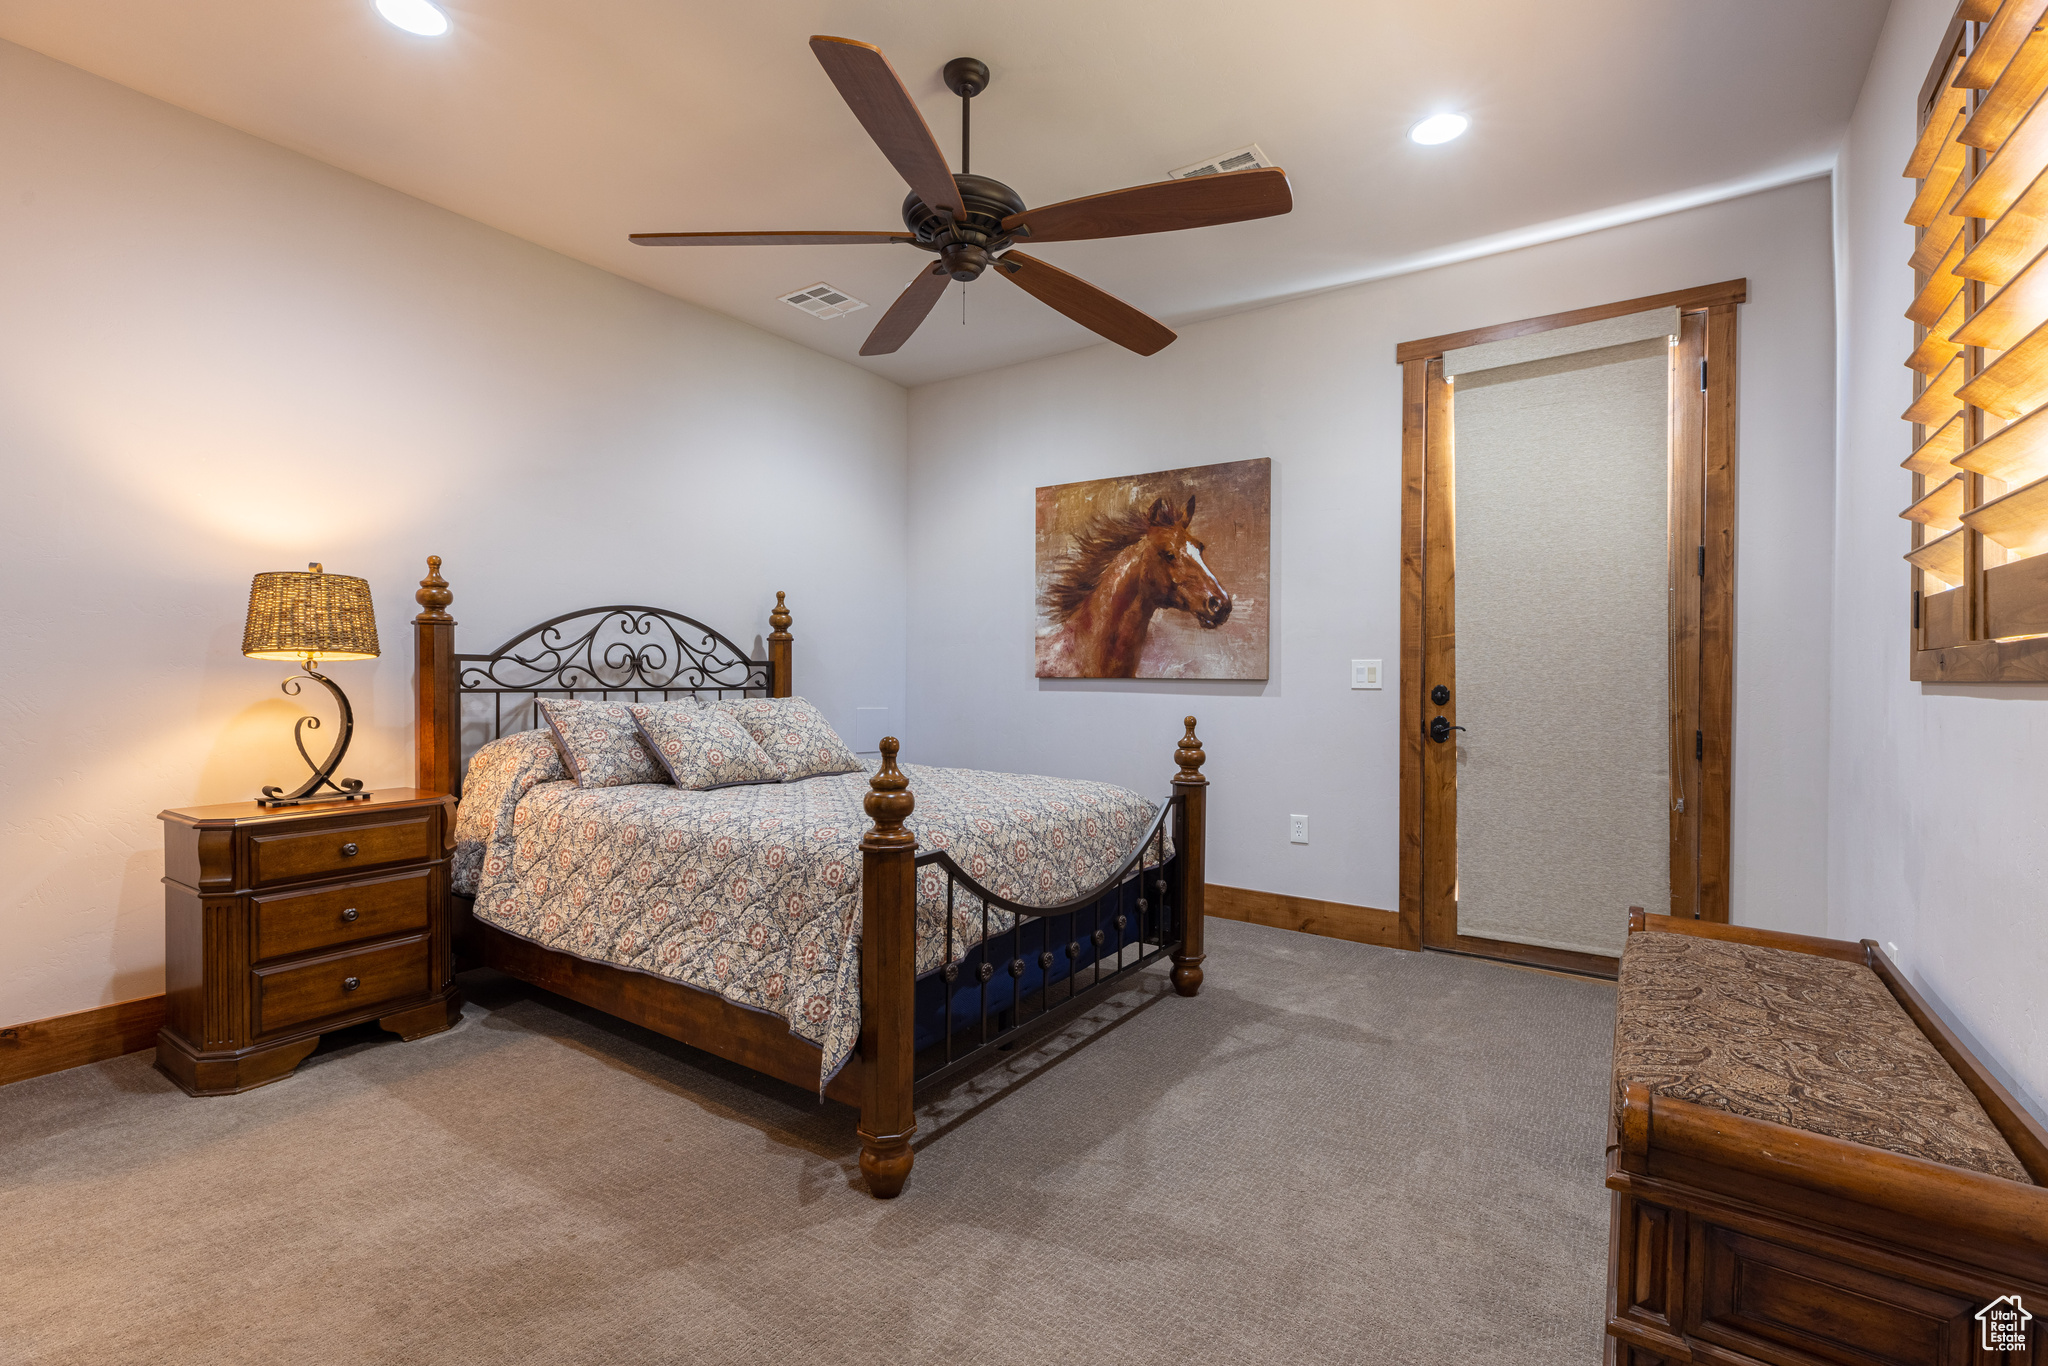 Casita Carpeted bedroom featuring ceiling fan w/ensuite bathroom